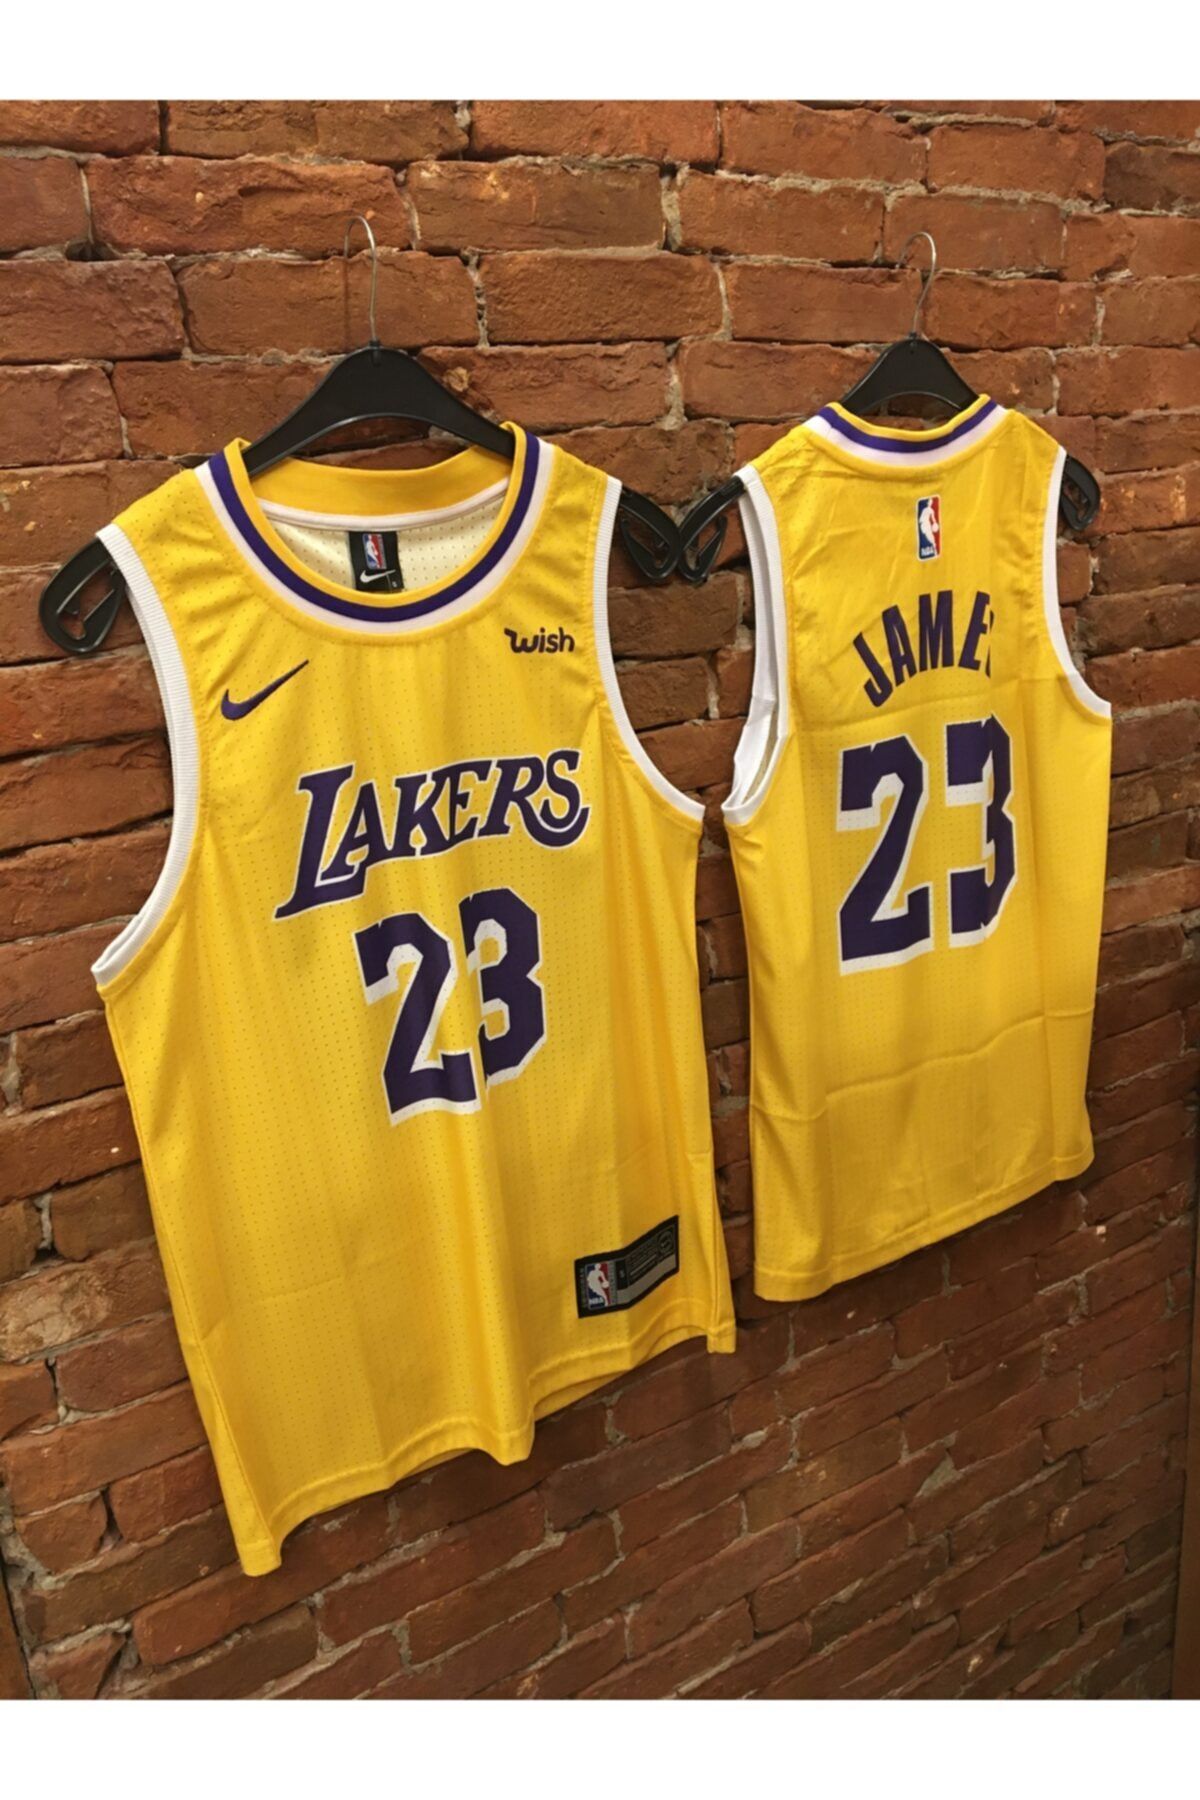 OLYMPUS STORE Unisex Lakers Lebron James 23 Numaralı Sarı Forma